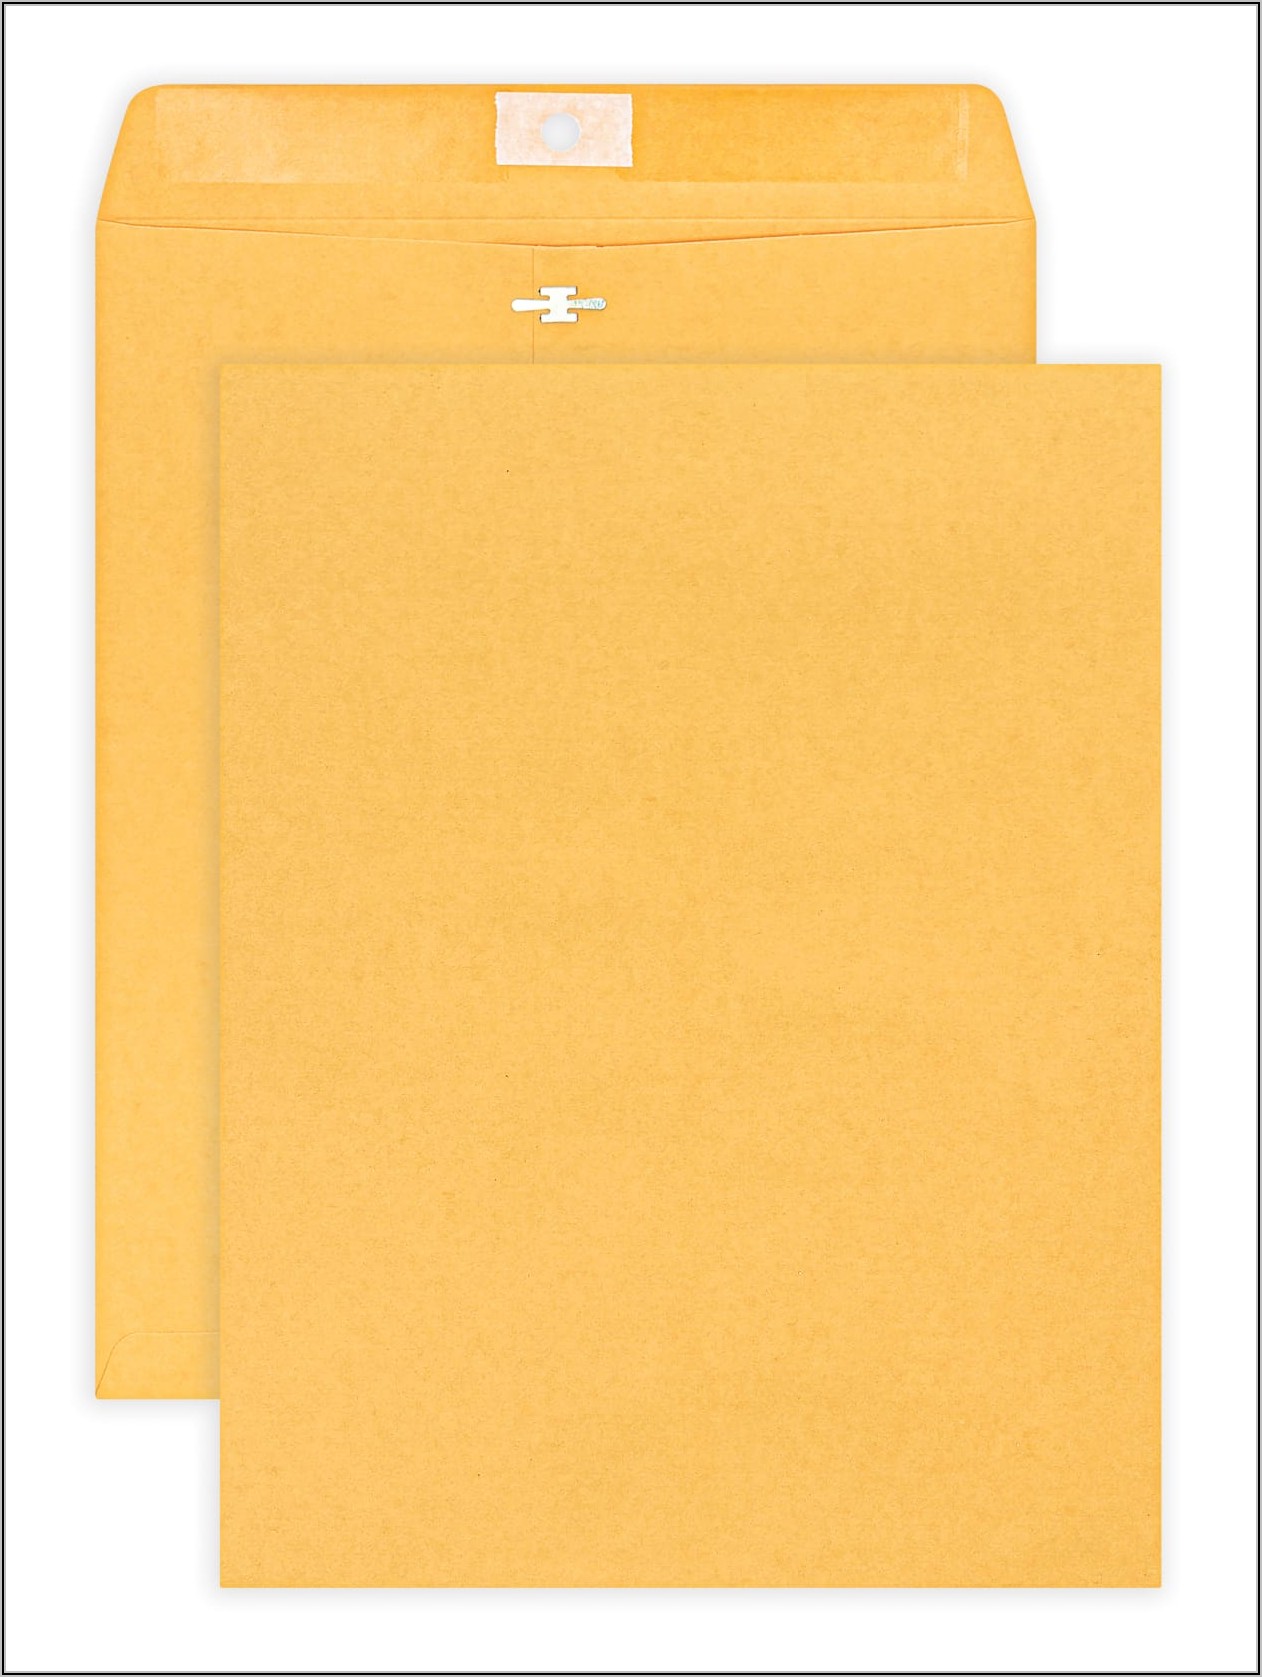 Office Depot 10 X 13 Envelopes